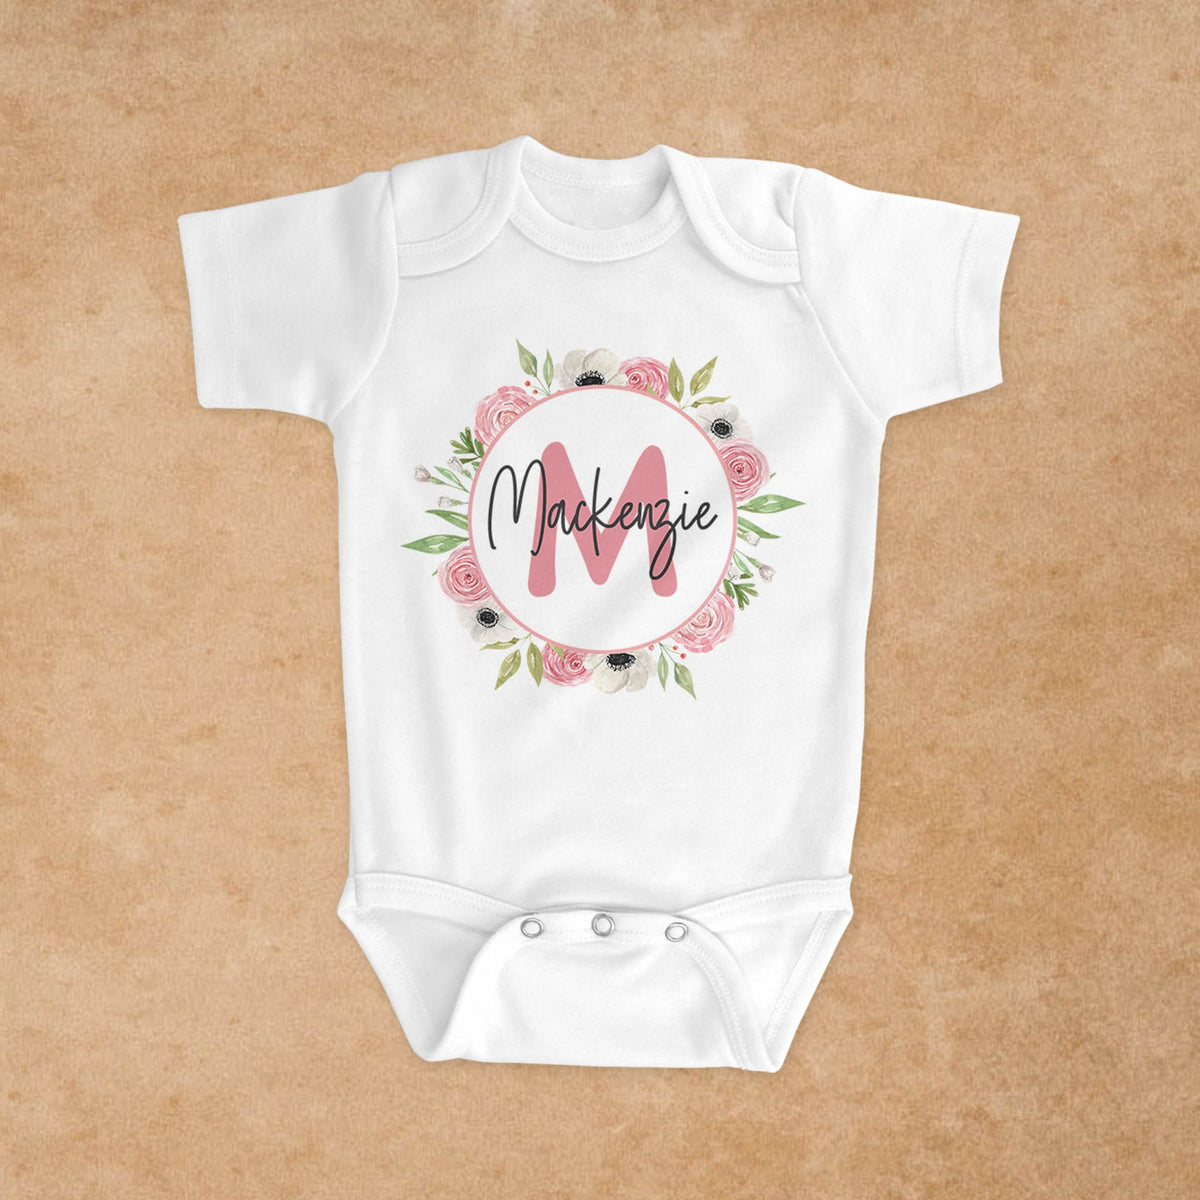 Personalized Burp Cloth | Custom Baby Gifts | Baby Shower | Pink &amp; White Rose Monogram